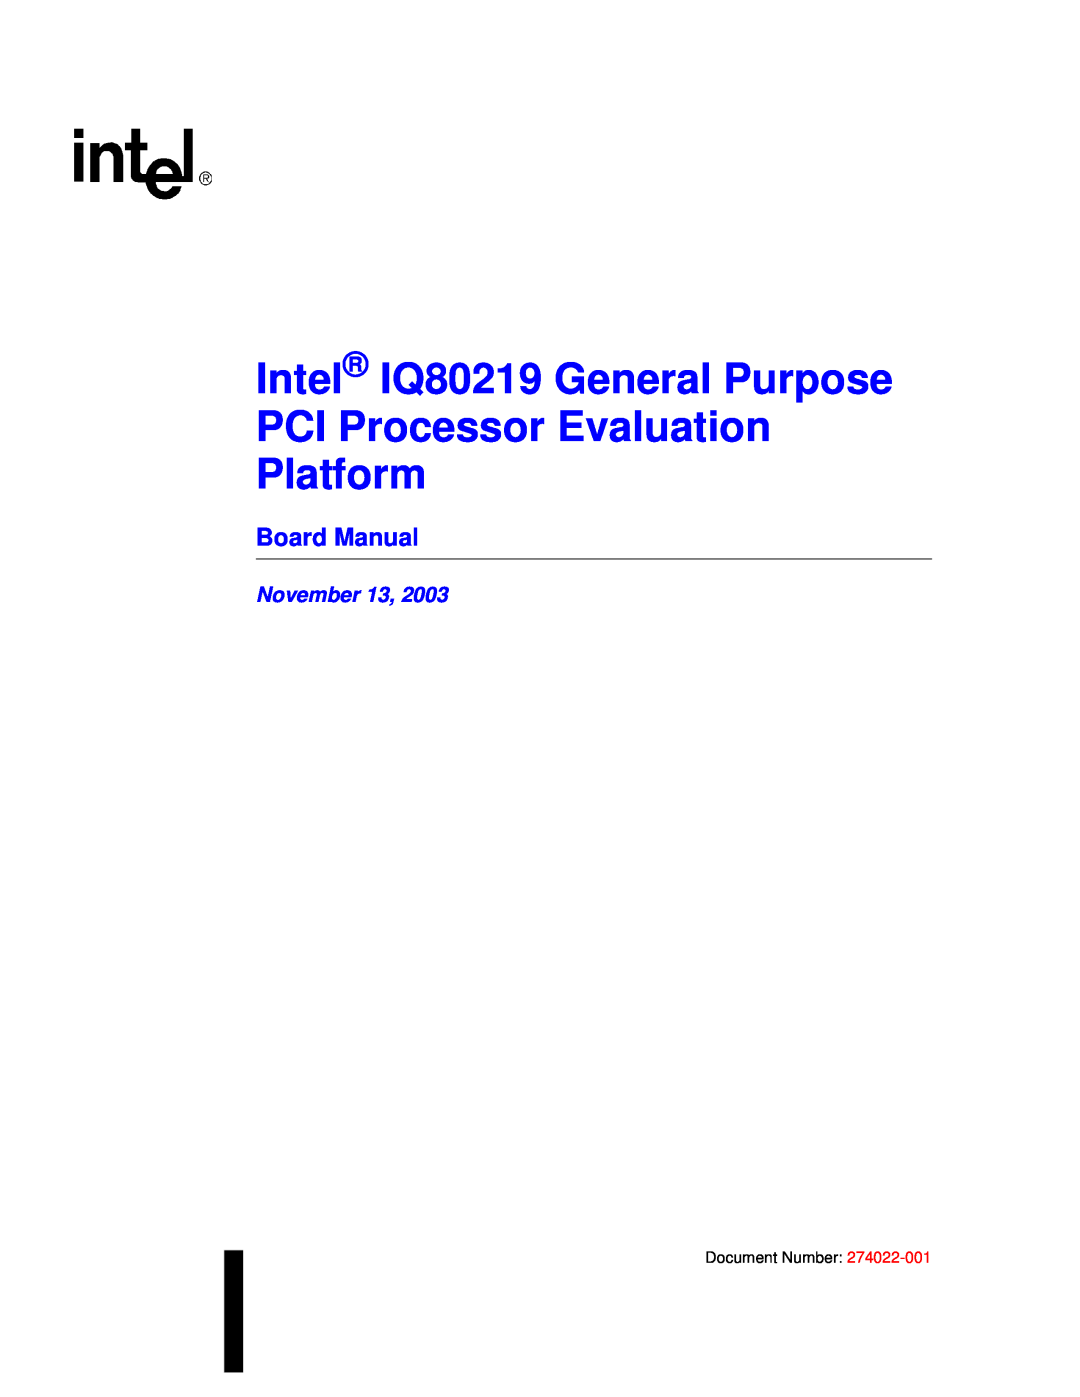 Intel manual Board Manual, Intel IQ80219 General Purpose PCI Processor Evaluation Platform, November 